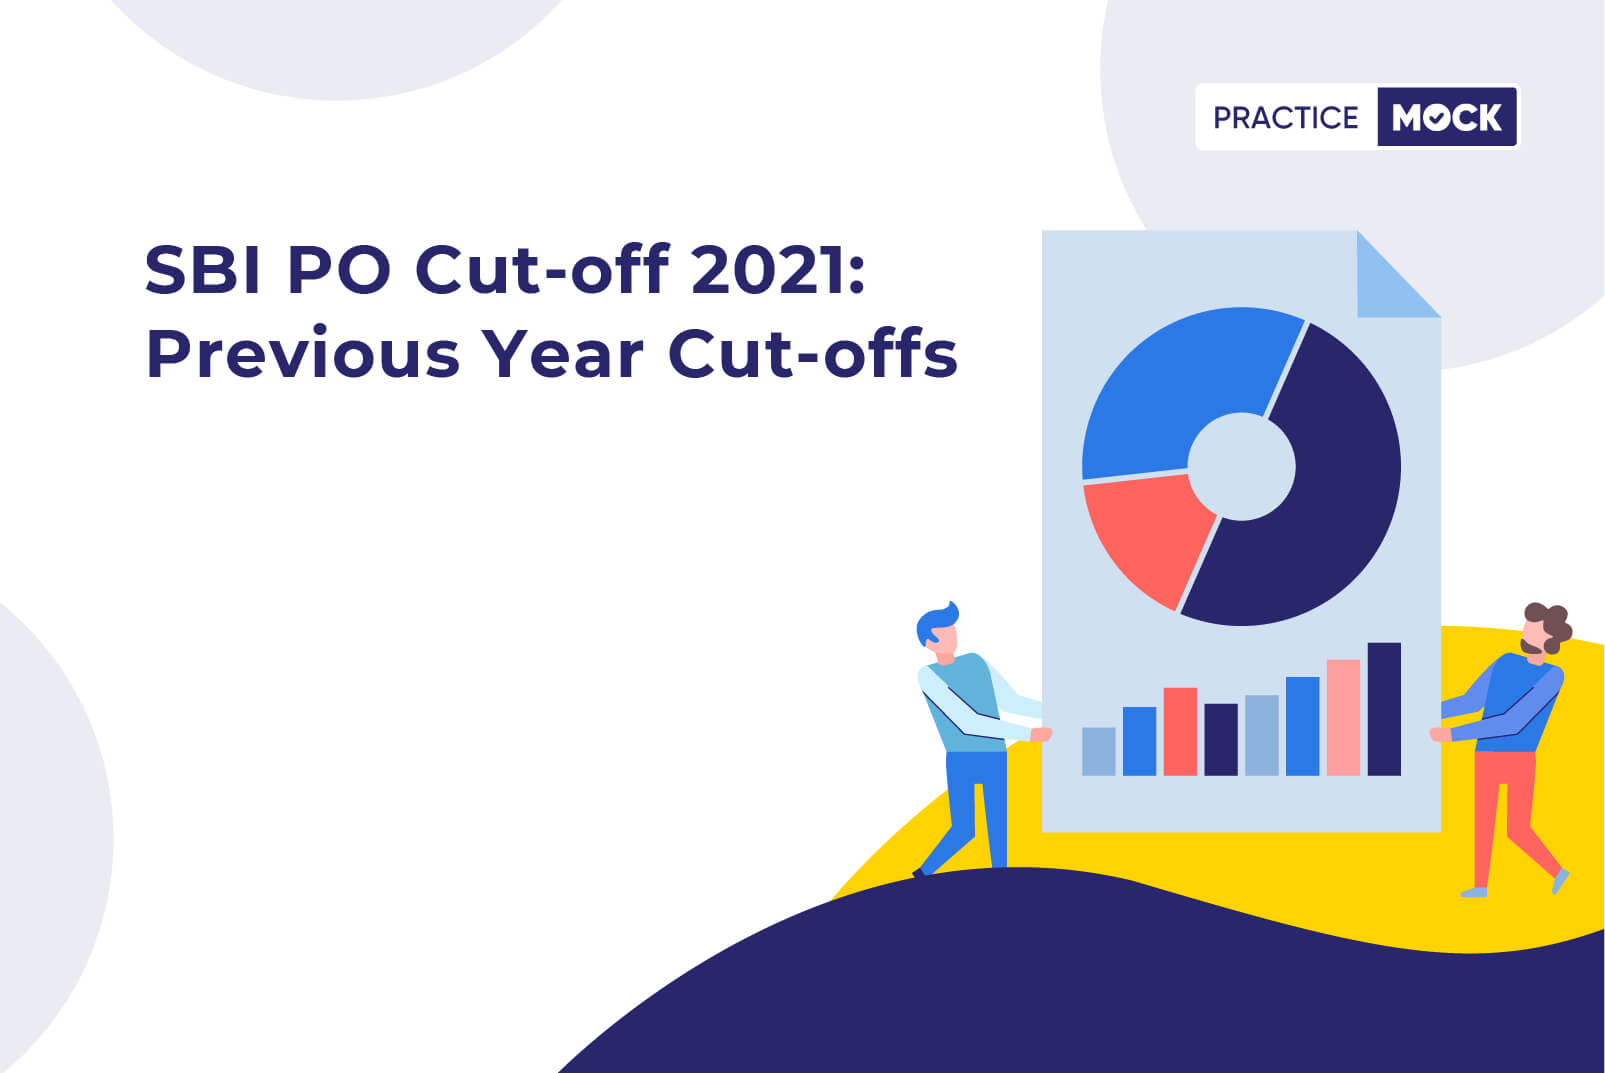 SBI PO Cut-off 2021 Previous Year Cut-offs